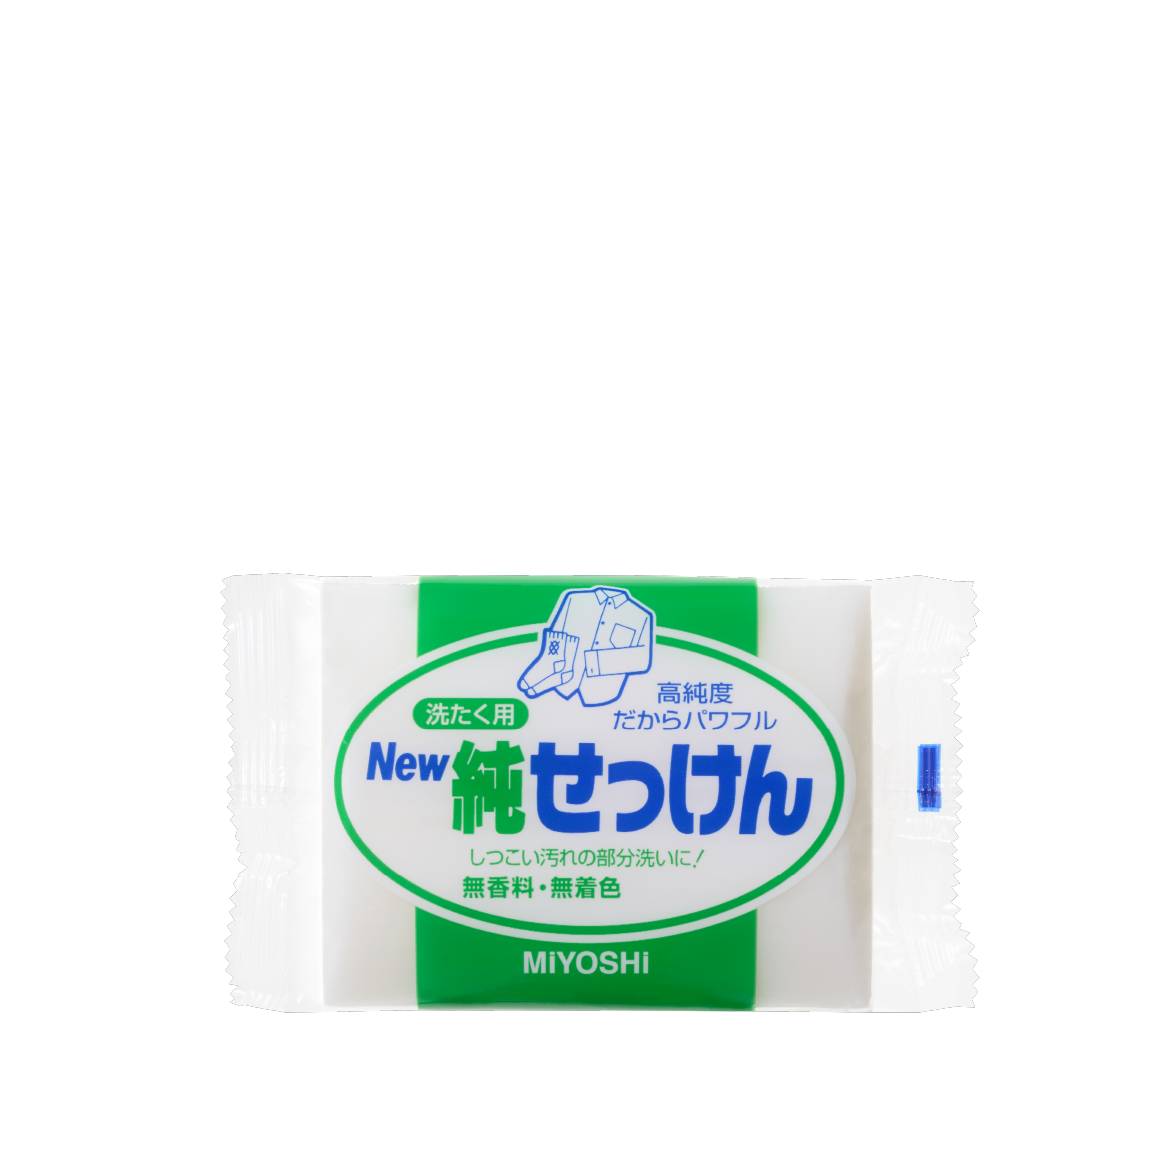 New純せっけん190g – MIYOSHI SOAP CORPORATION